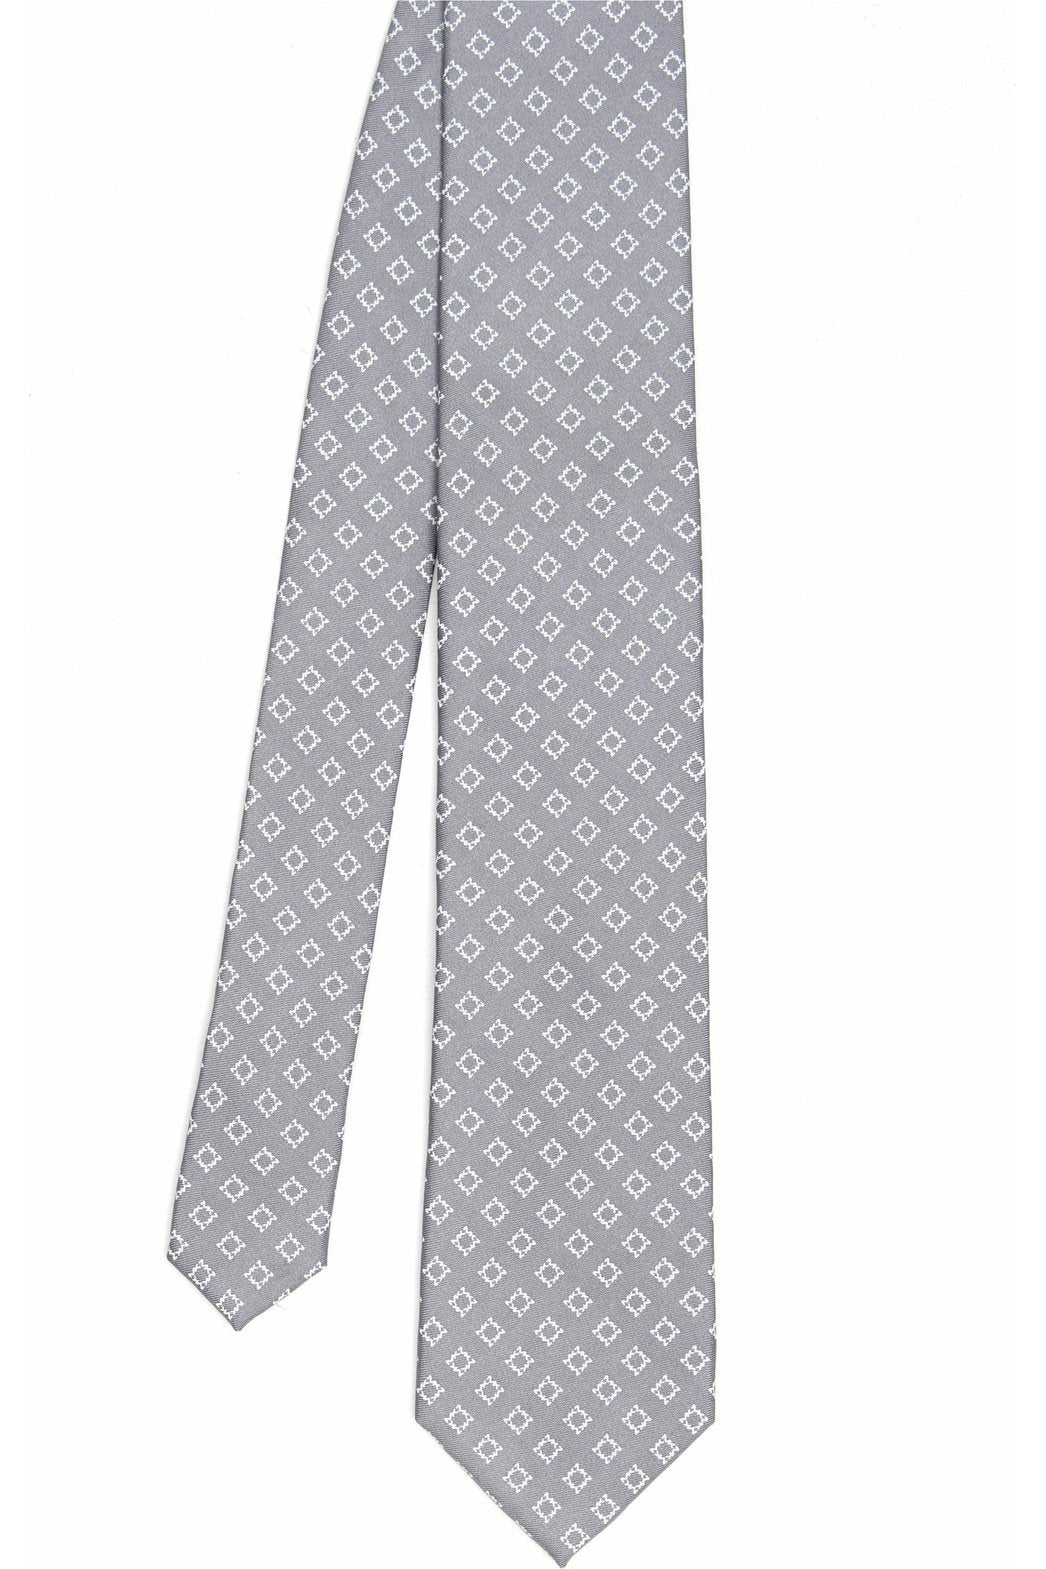 MICHAELKORS MD0MD91005 cravatta in seta con rombi stampati